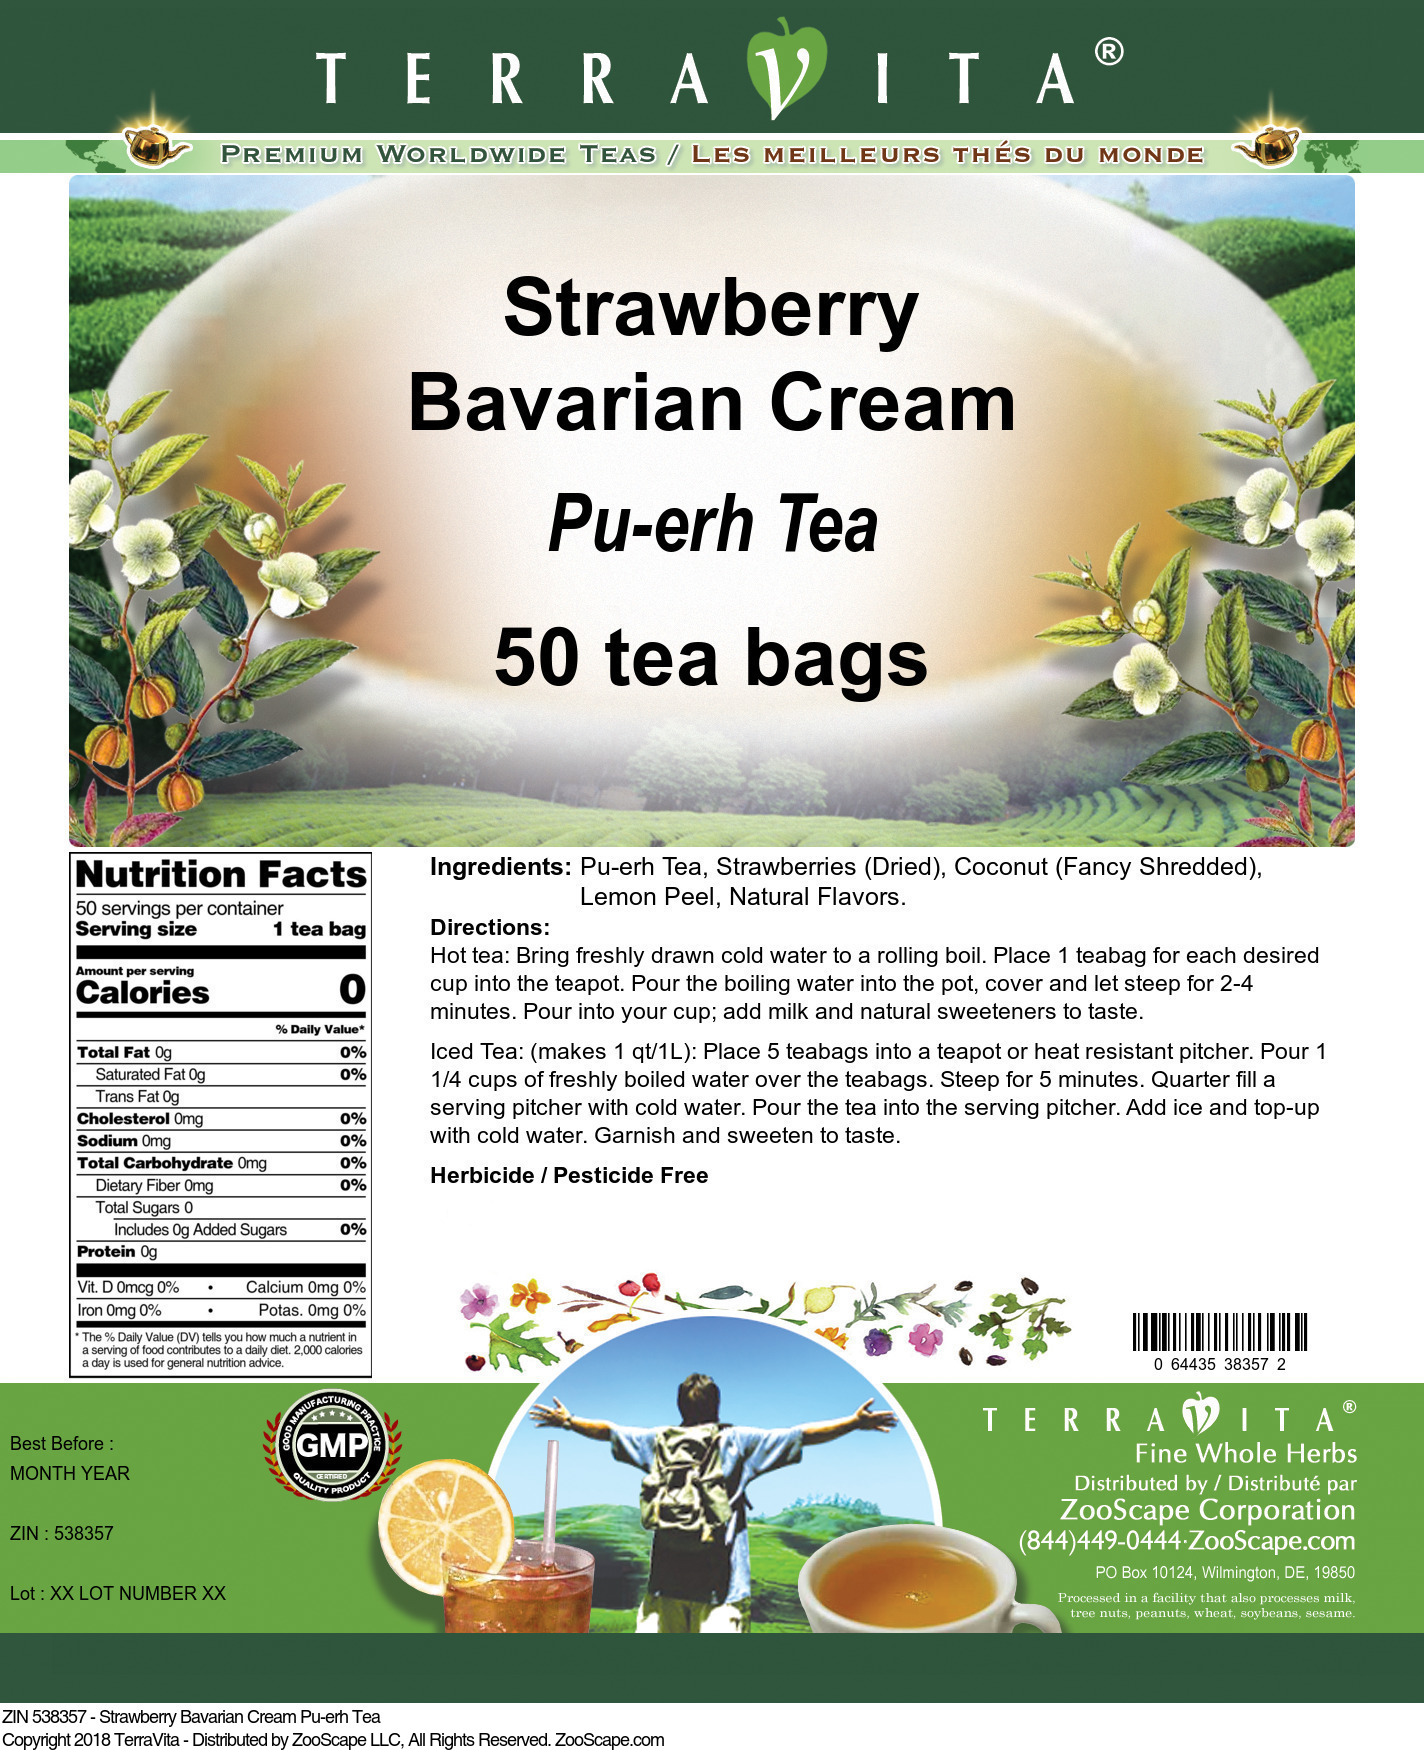 Strawberry Bavarian Cream Pu-erh Tea - Label